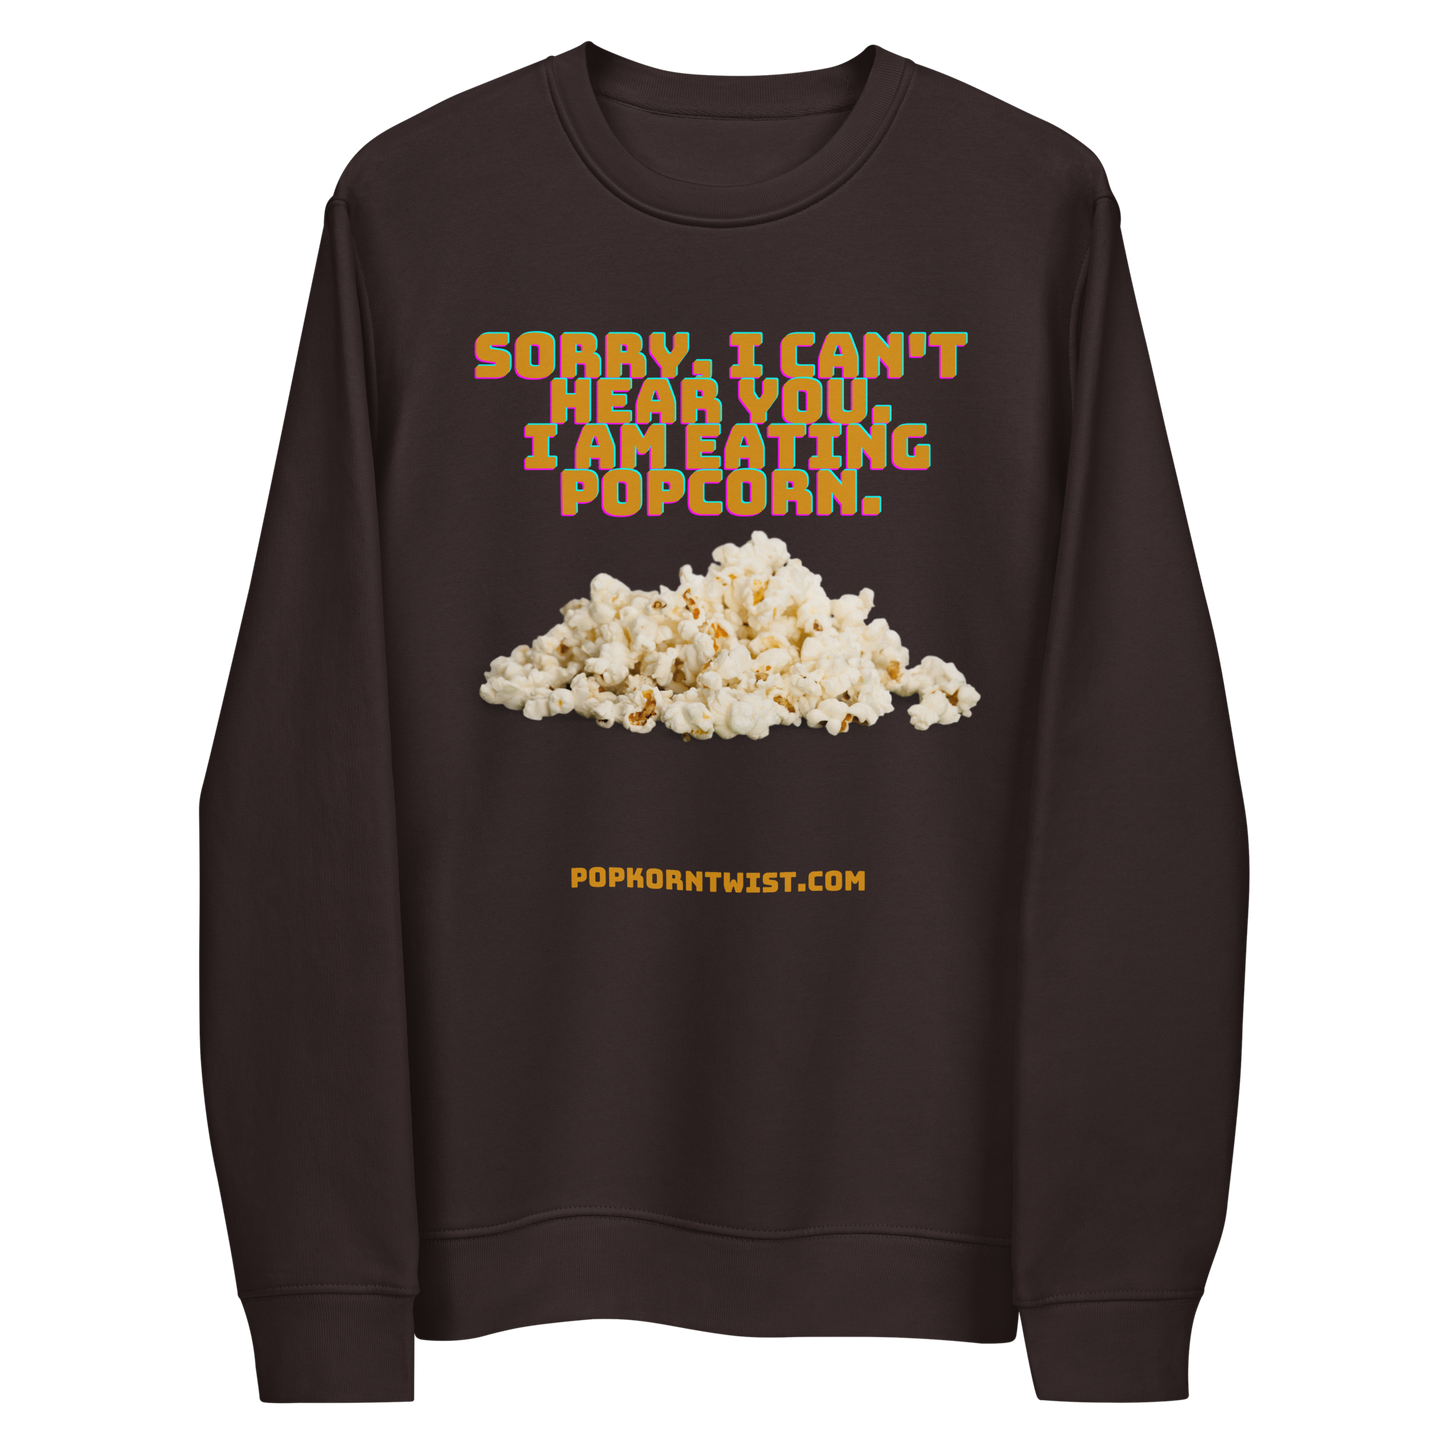 Eco sweatshirt -  Sorry. I can't Hear You. I am eating popcorn.